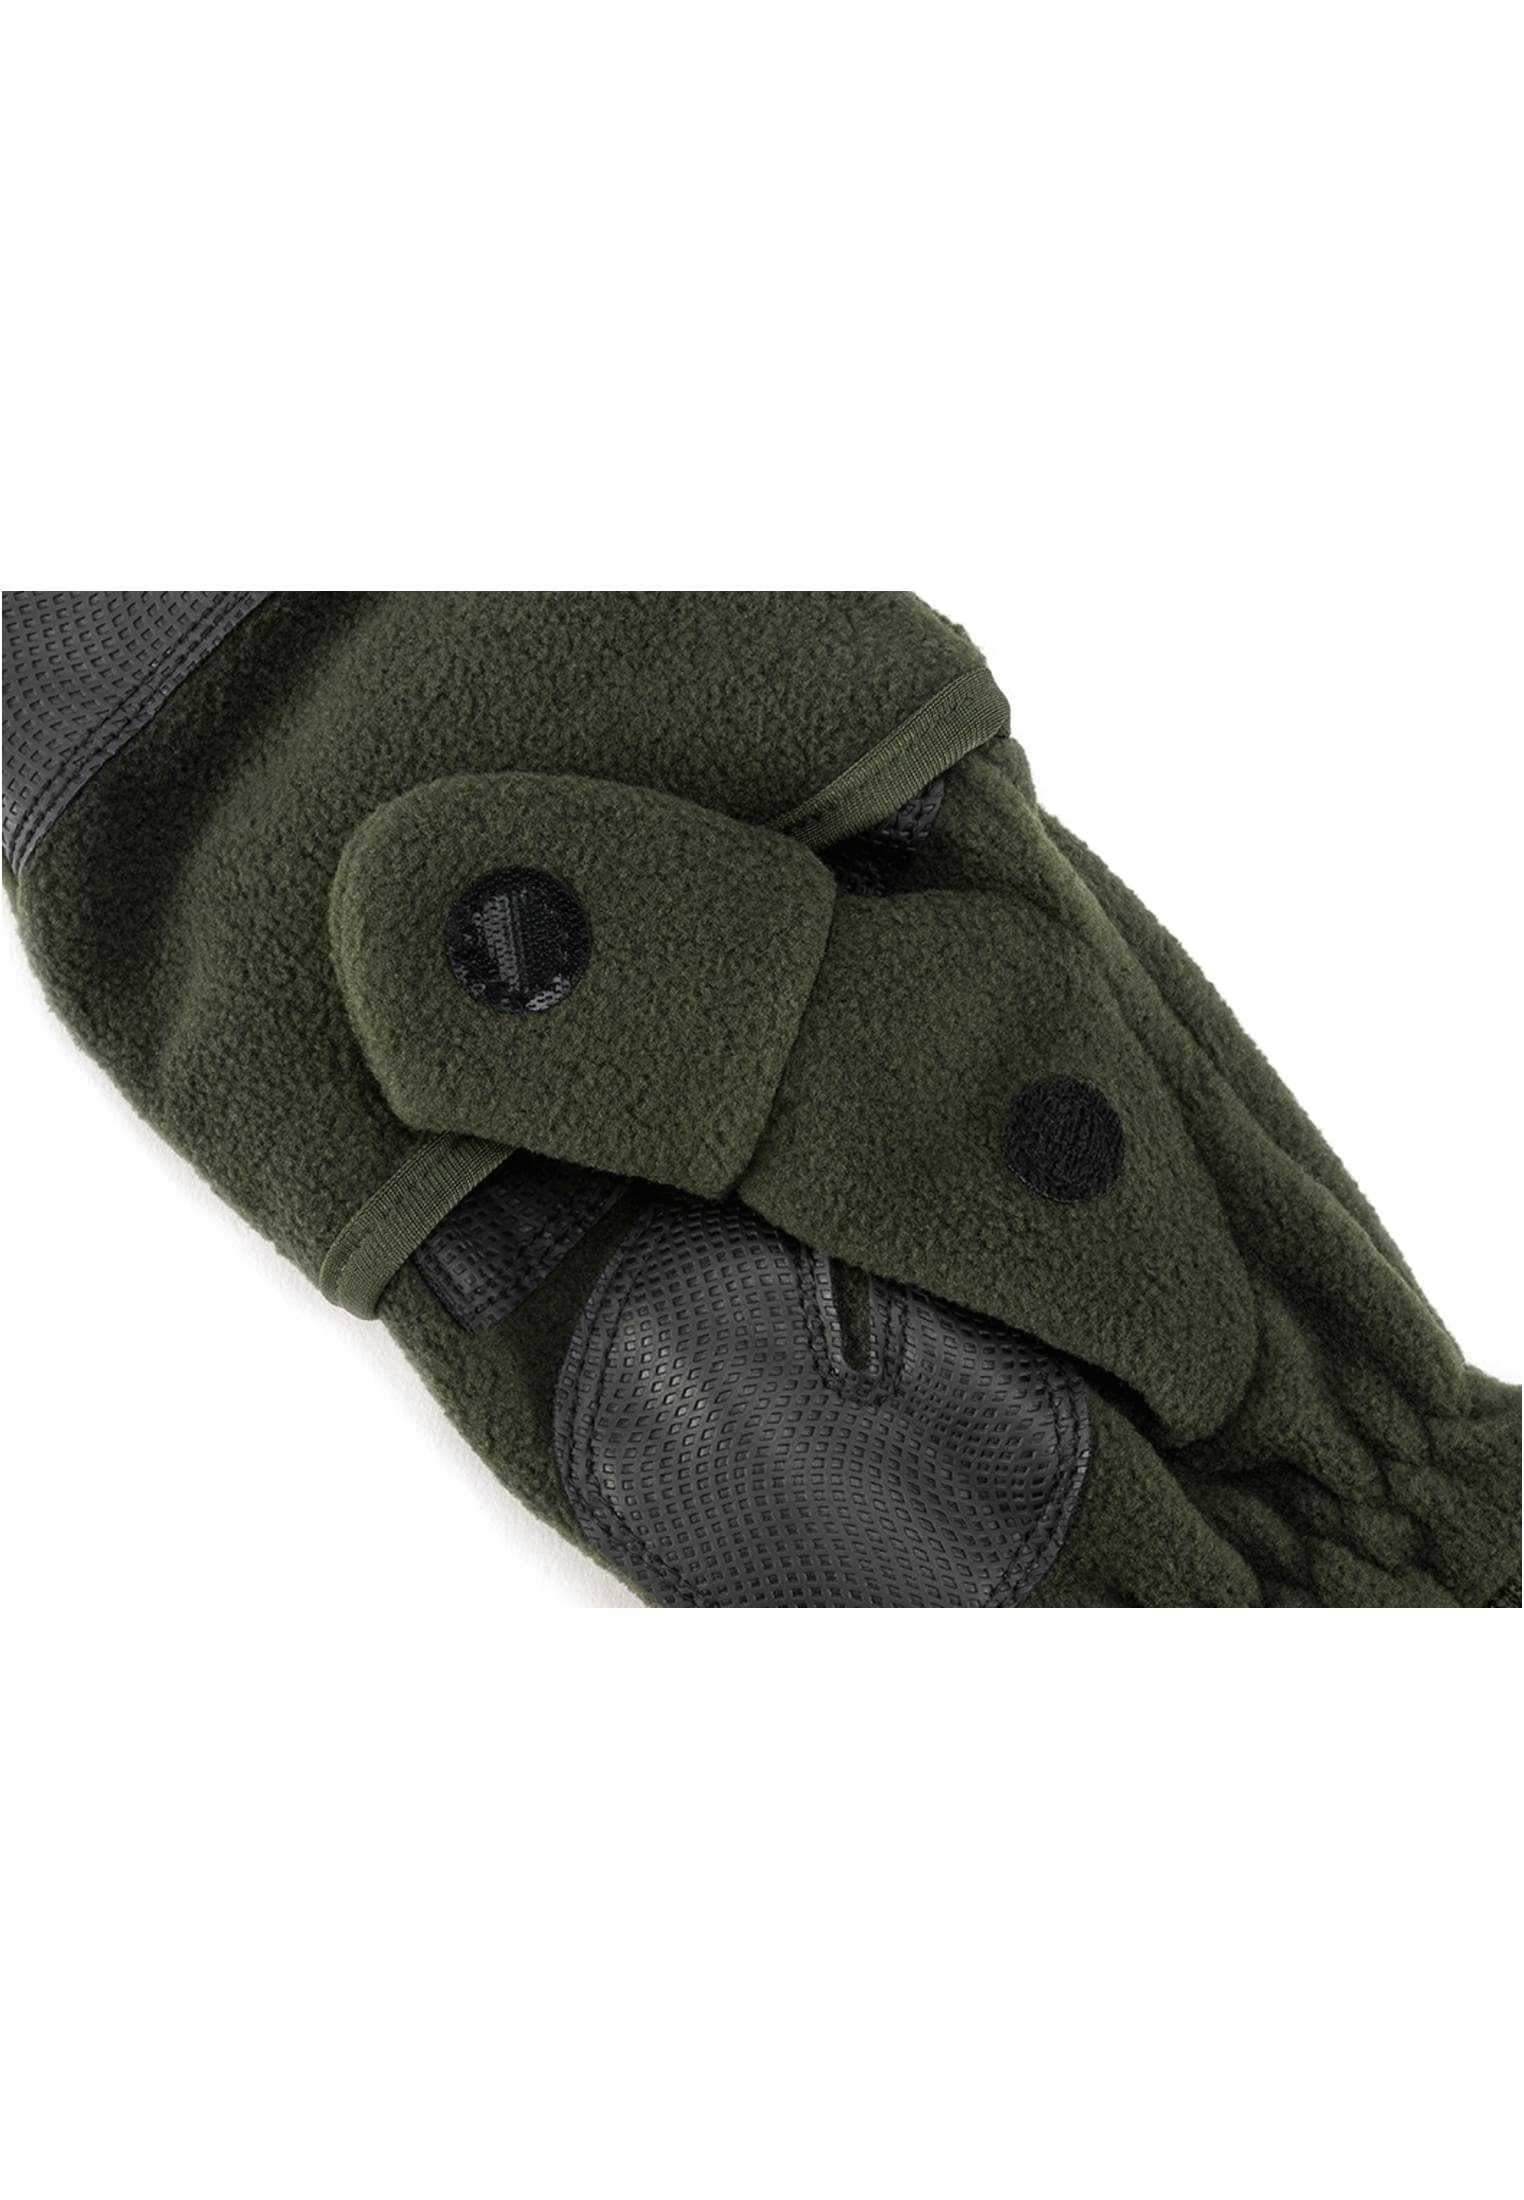 Baumwollhandschuhe Brandit olive Accessoires Gloves Trigger